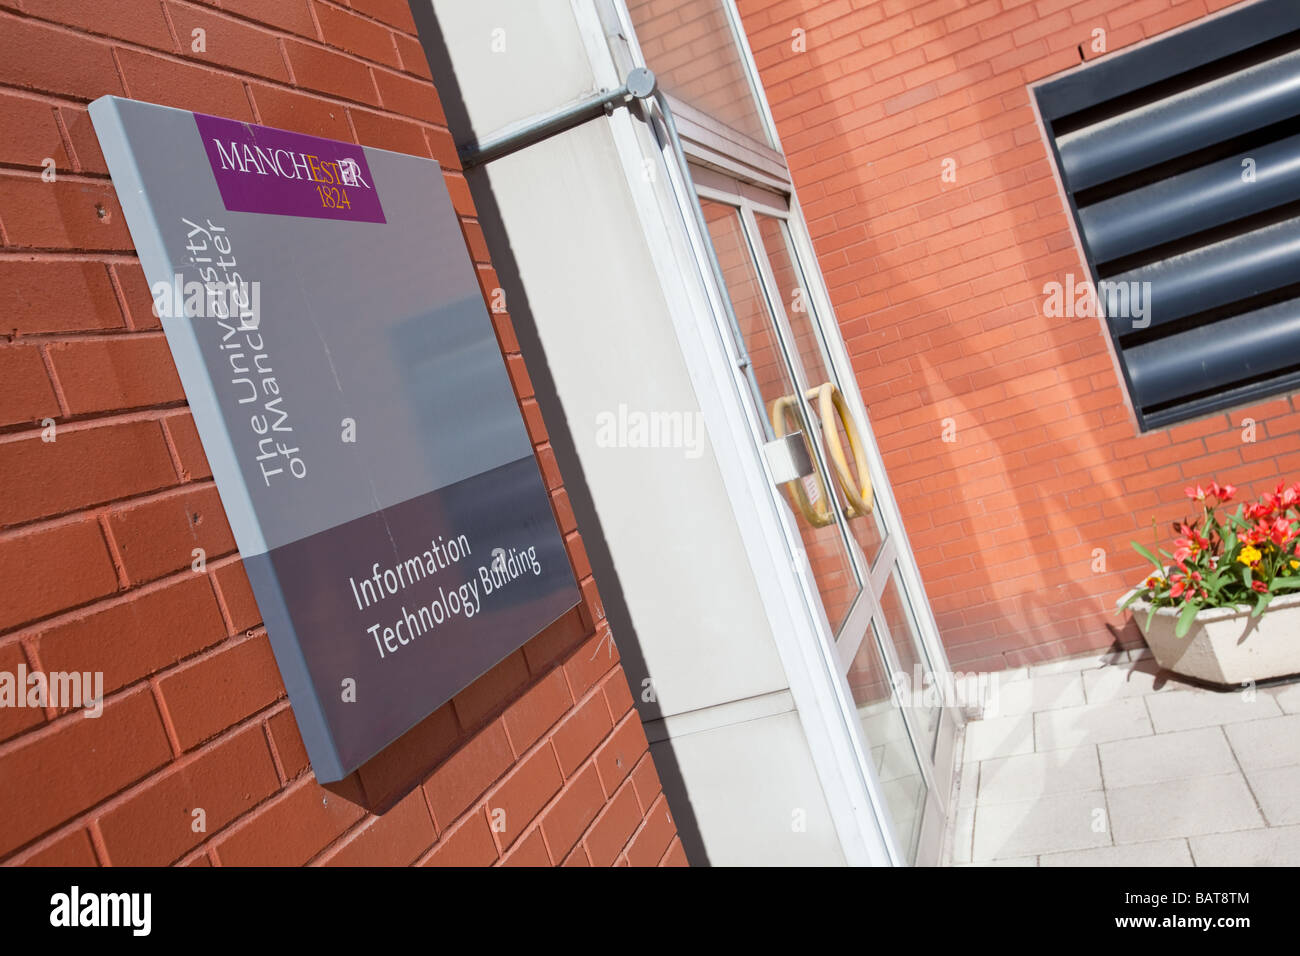 Information Technology Building, der University of Manchester, UK Stockfoto